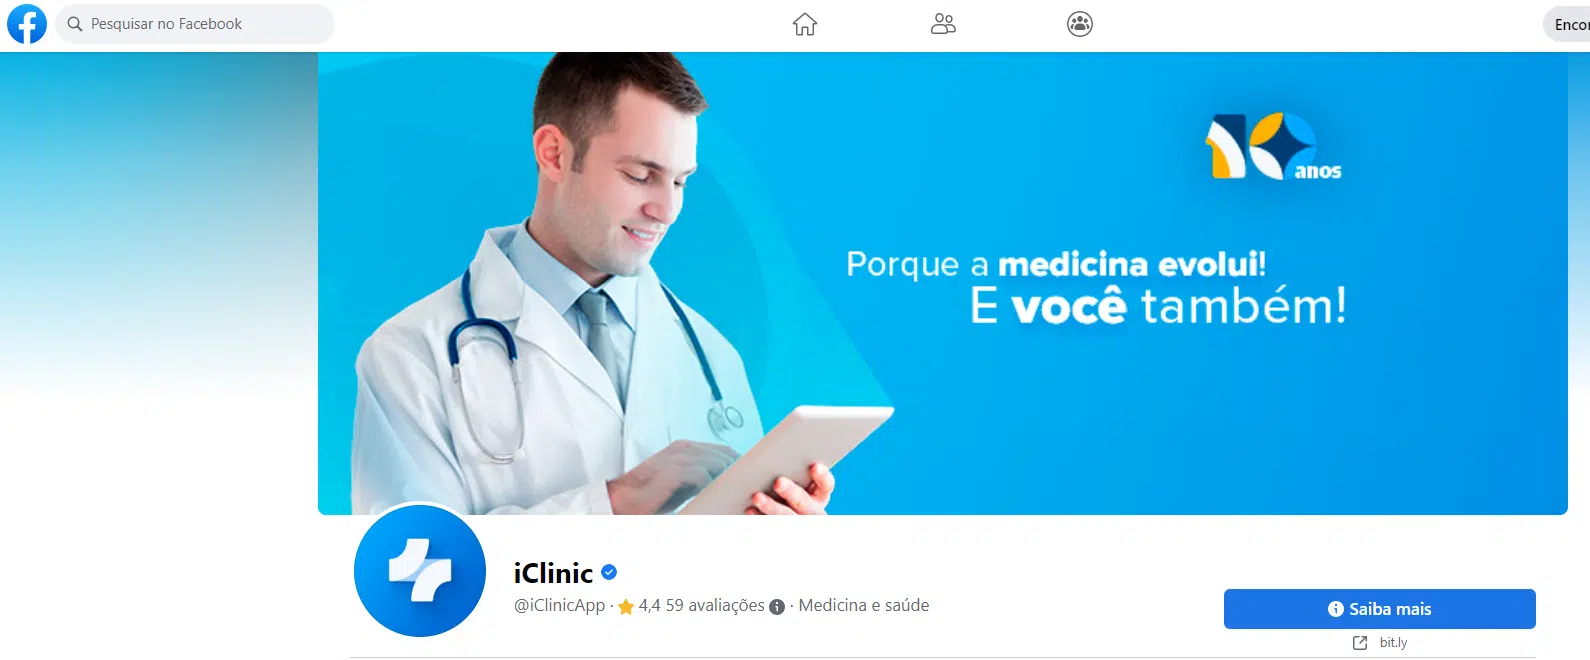 Página do Facebook do iClinic